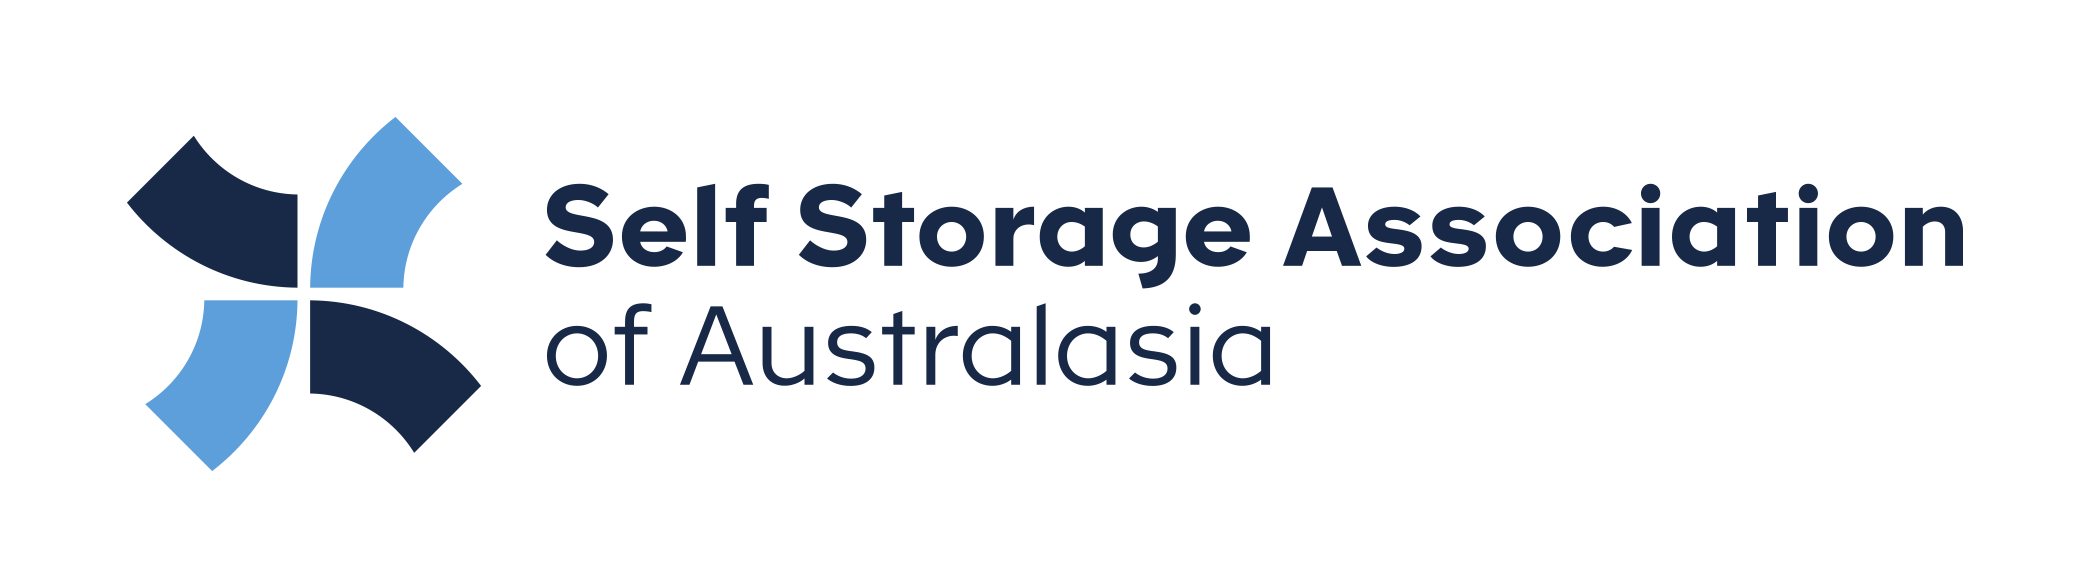 Self Storage Association of Australia logo